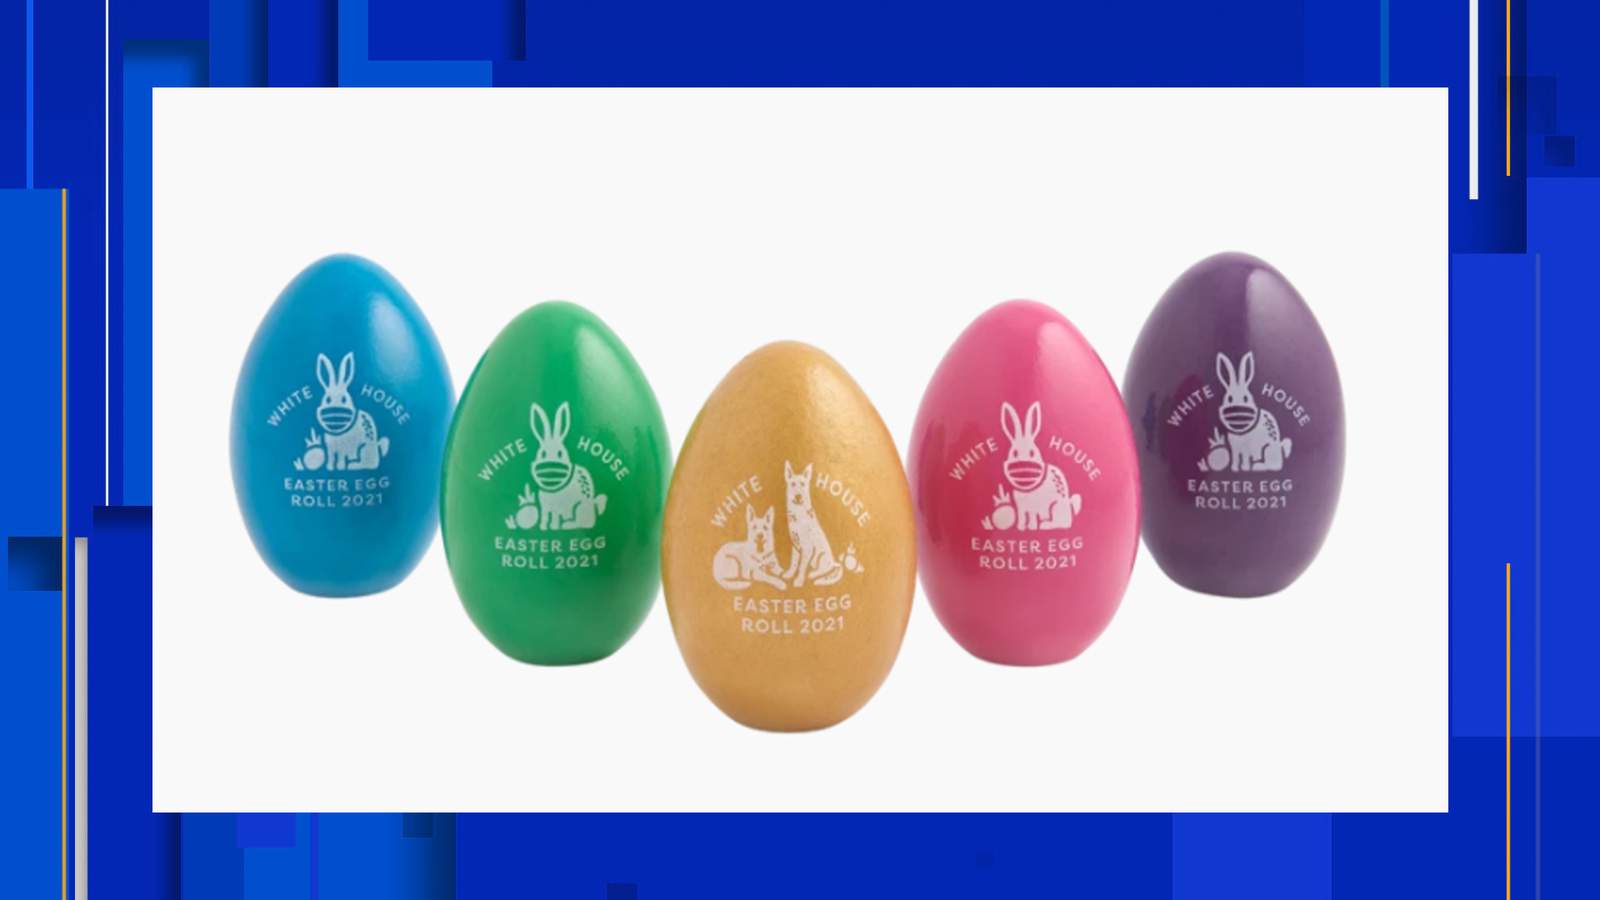 White House sending commemorative Easter eggs to San Antonio vaccine site